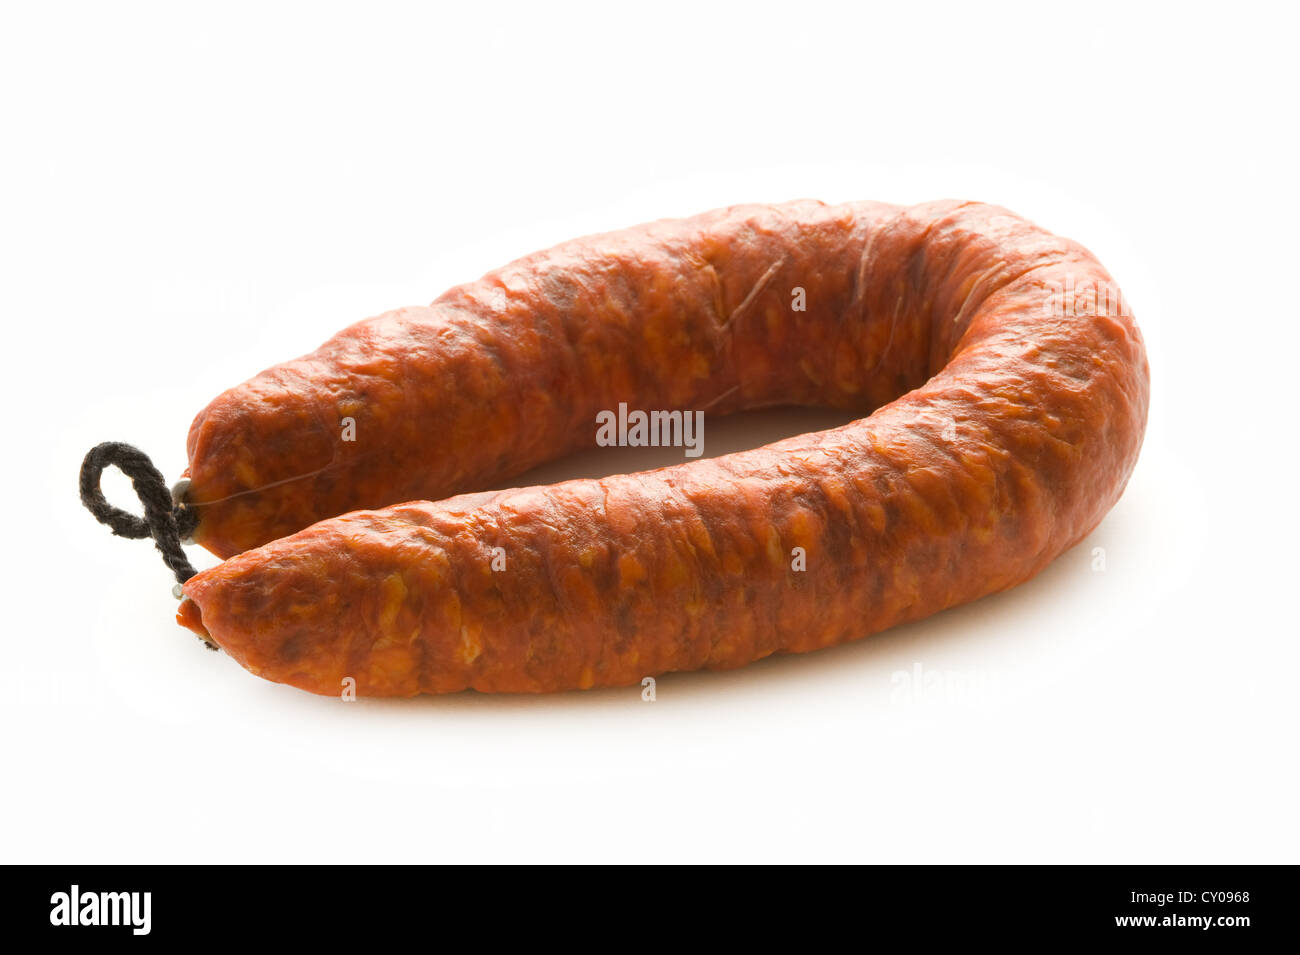 spanish chorizo preserved pork sausage isolated on a white background Stock Photo